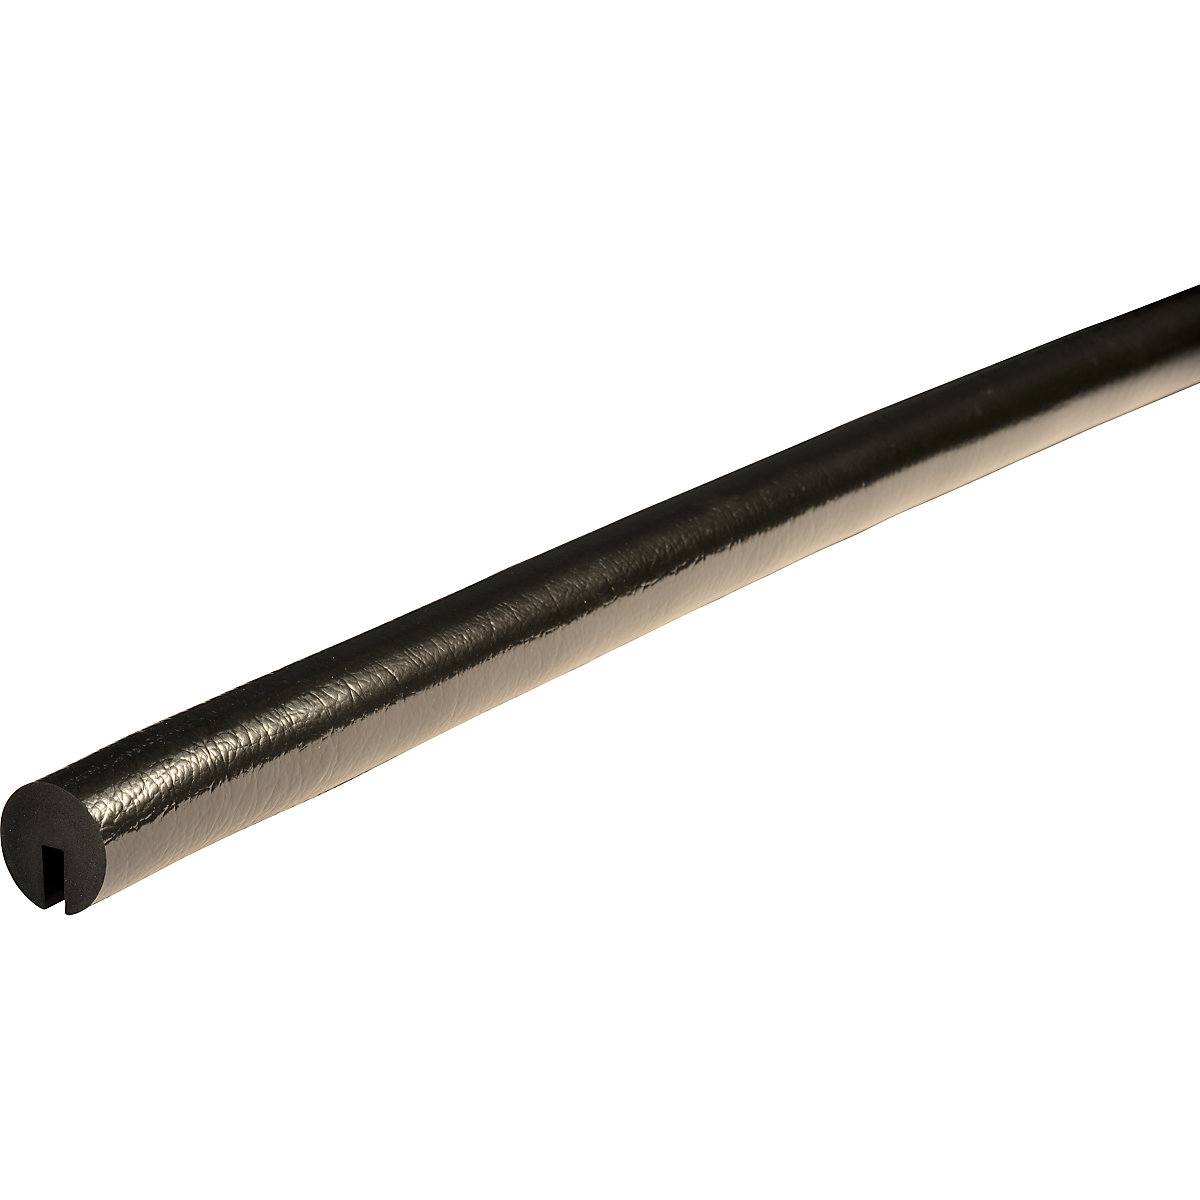 Knuffi® edge protection – SHG, type B, 1 x 50 m roll, black-19